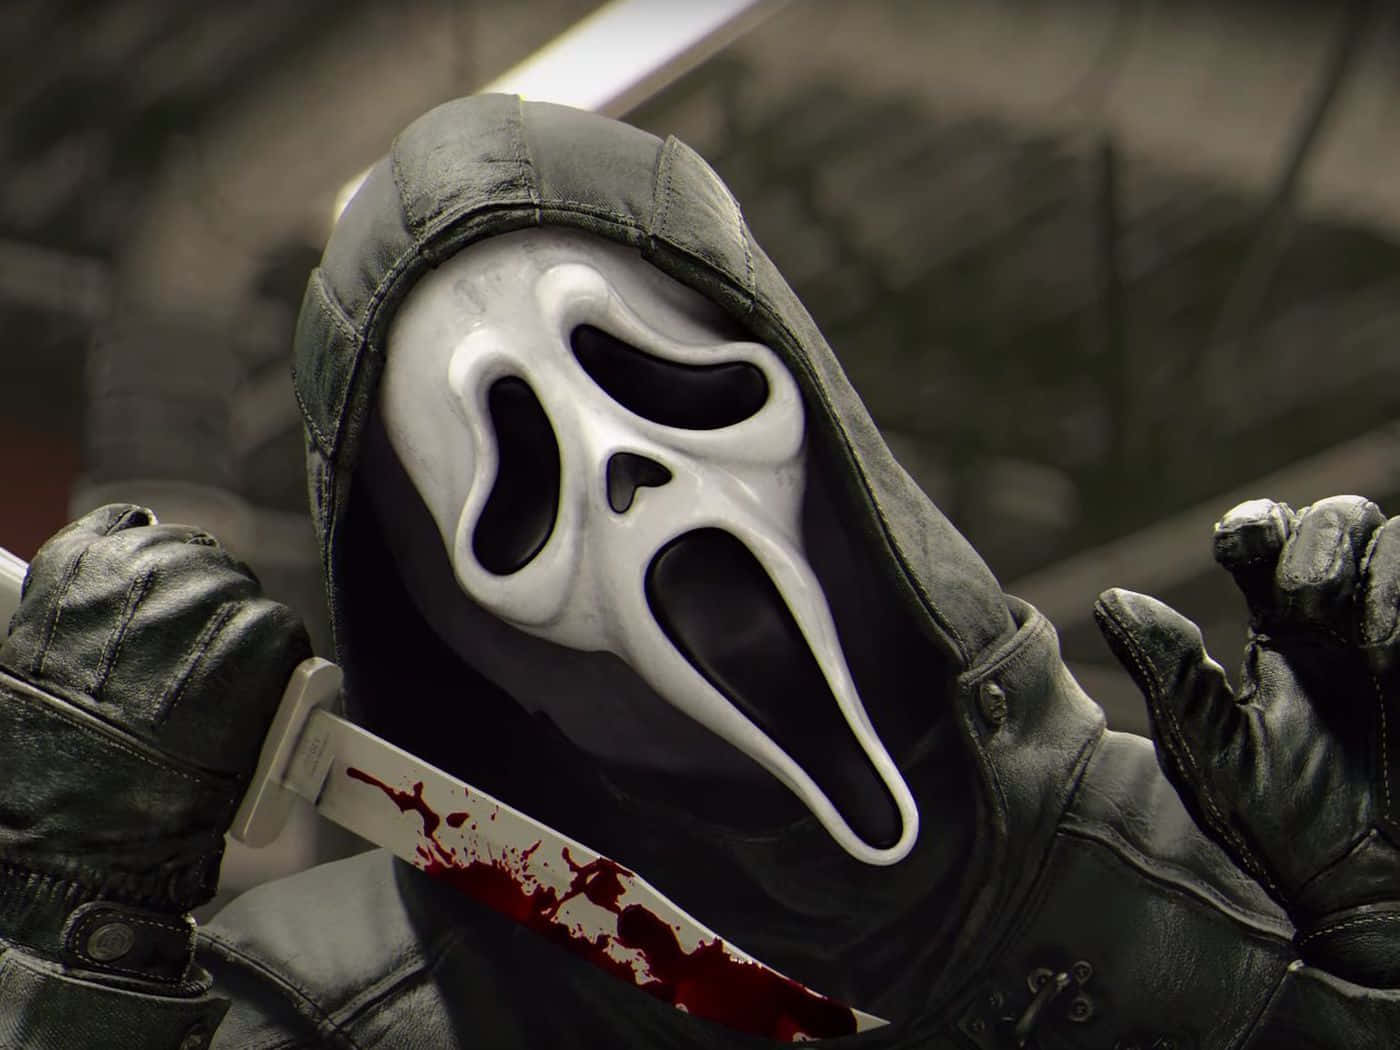 Free Scream Ghostface Wallpaper Downloads, Scream Ghostface Wallpaper for FREE